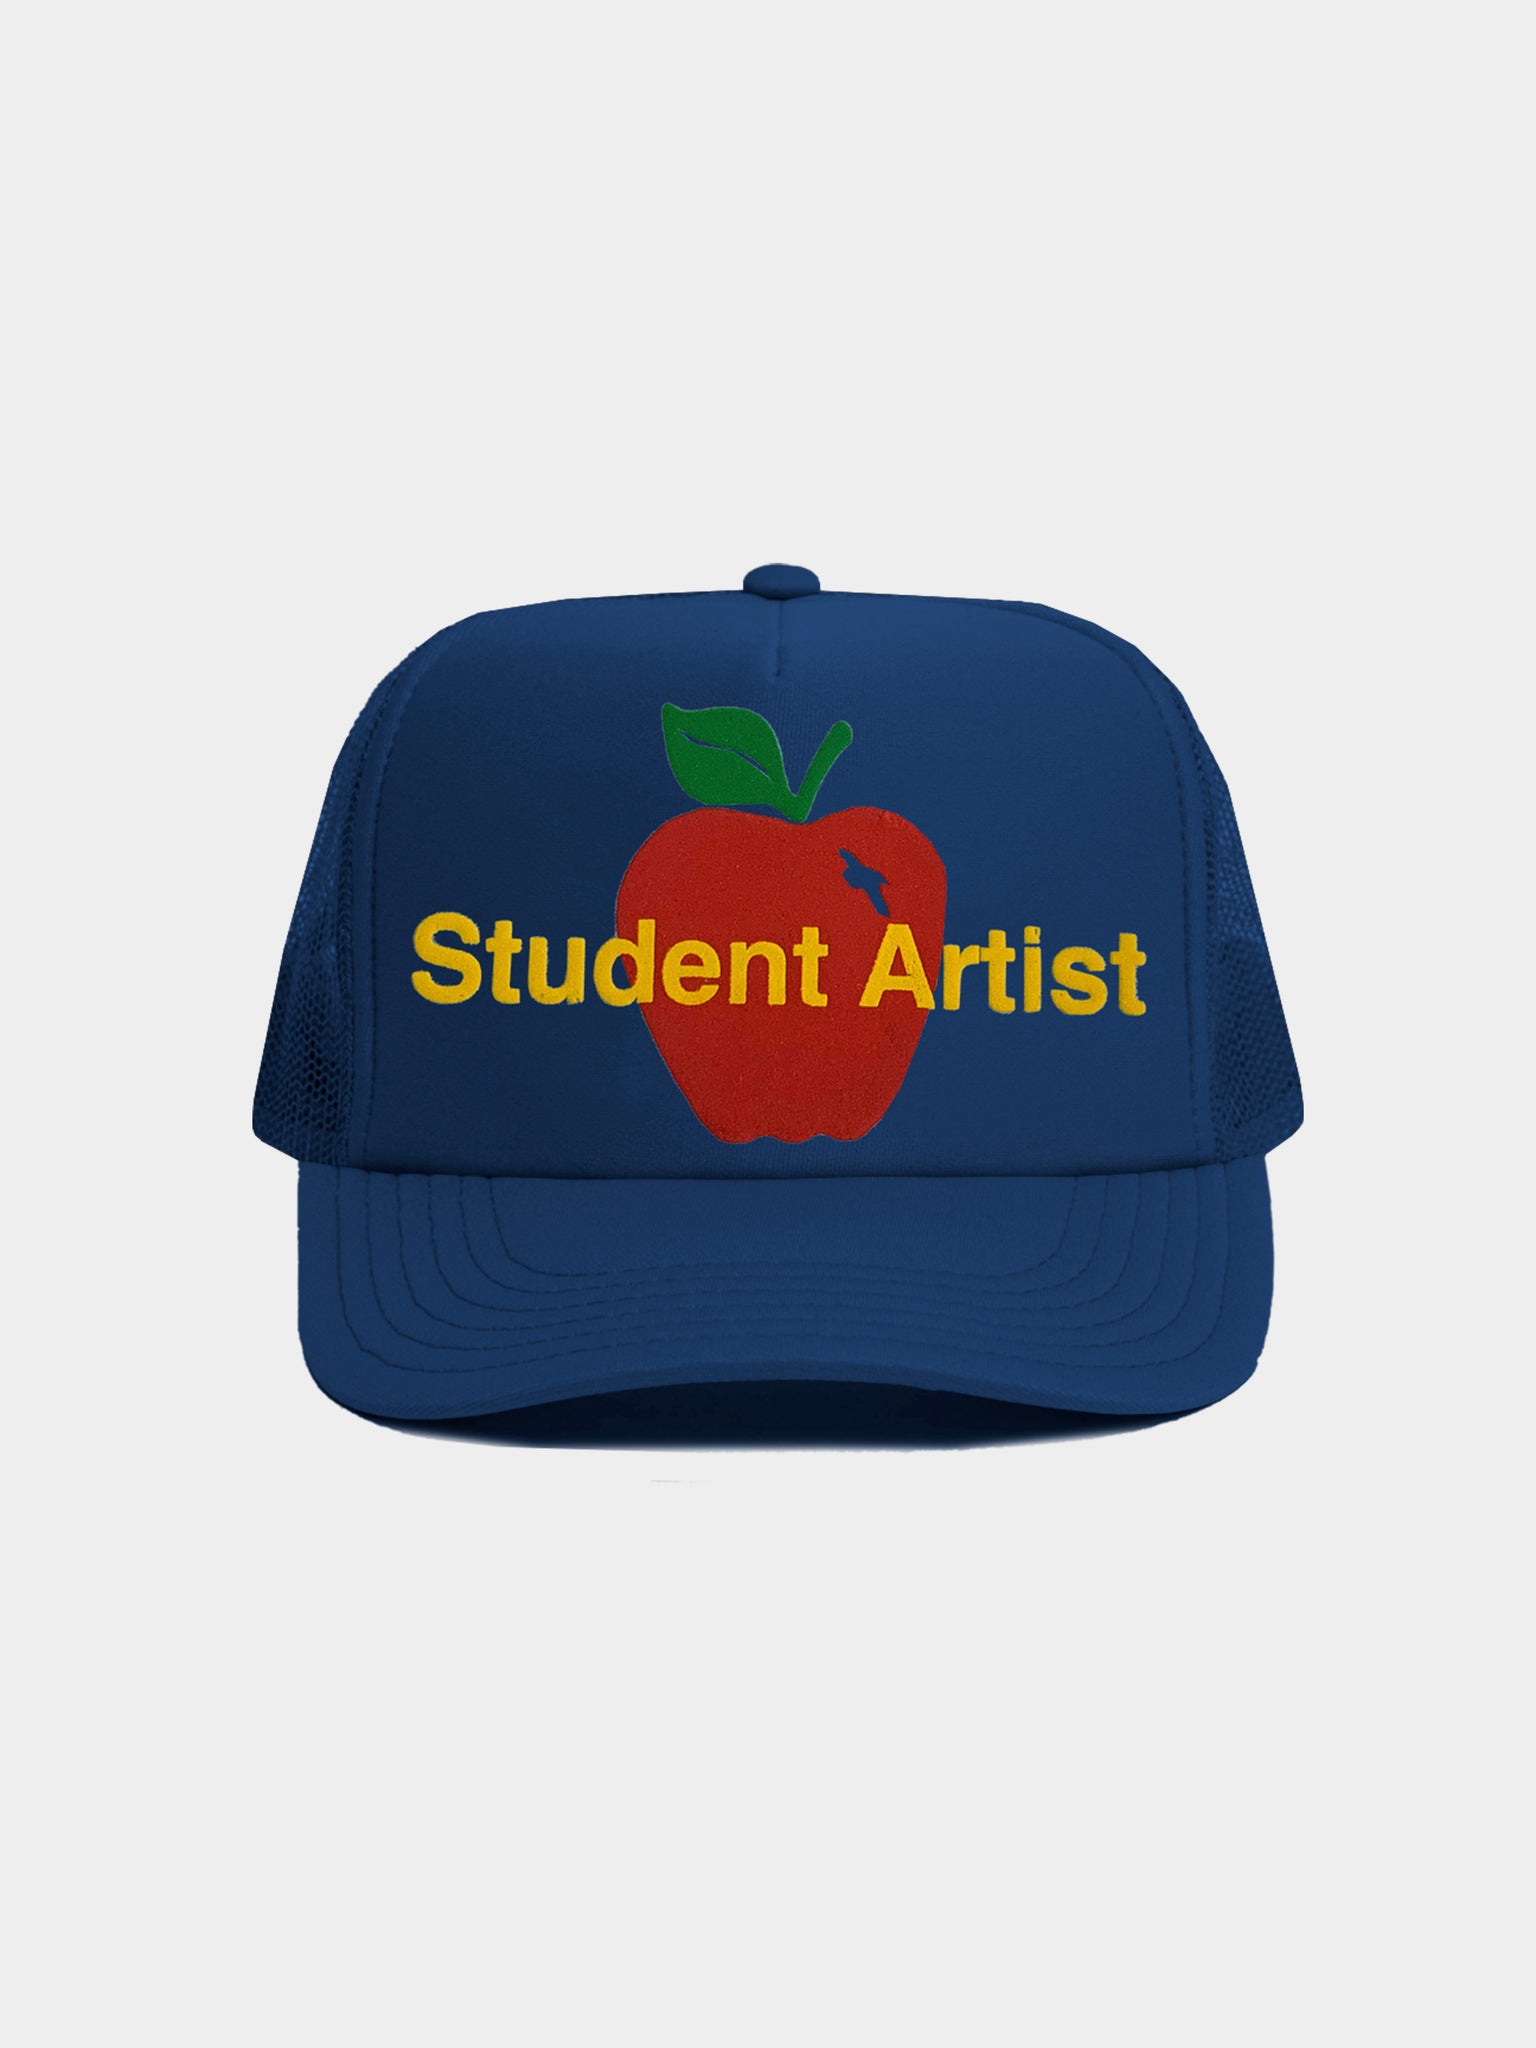 Student Artist Trucker Hat